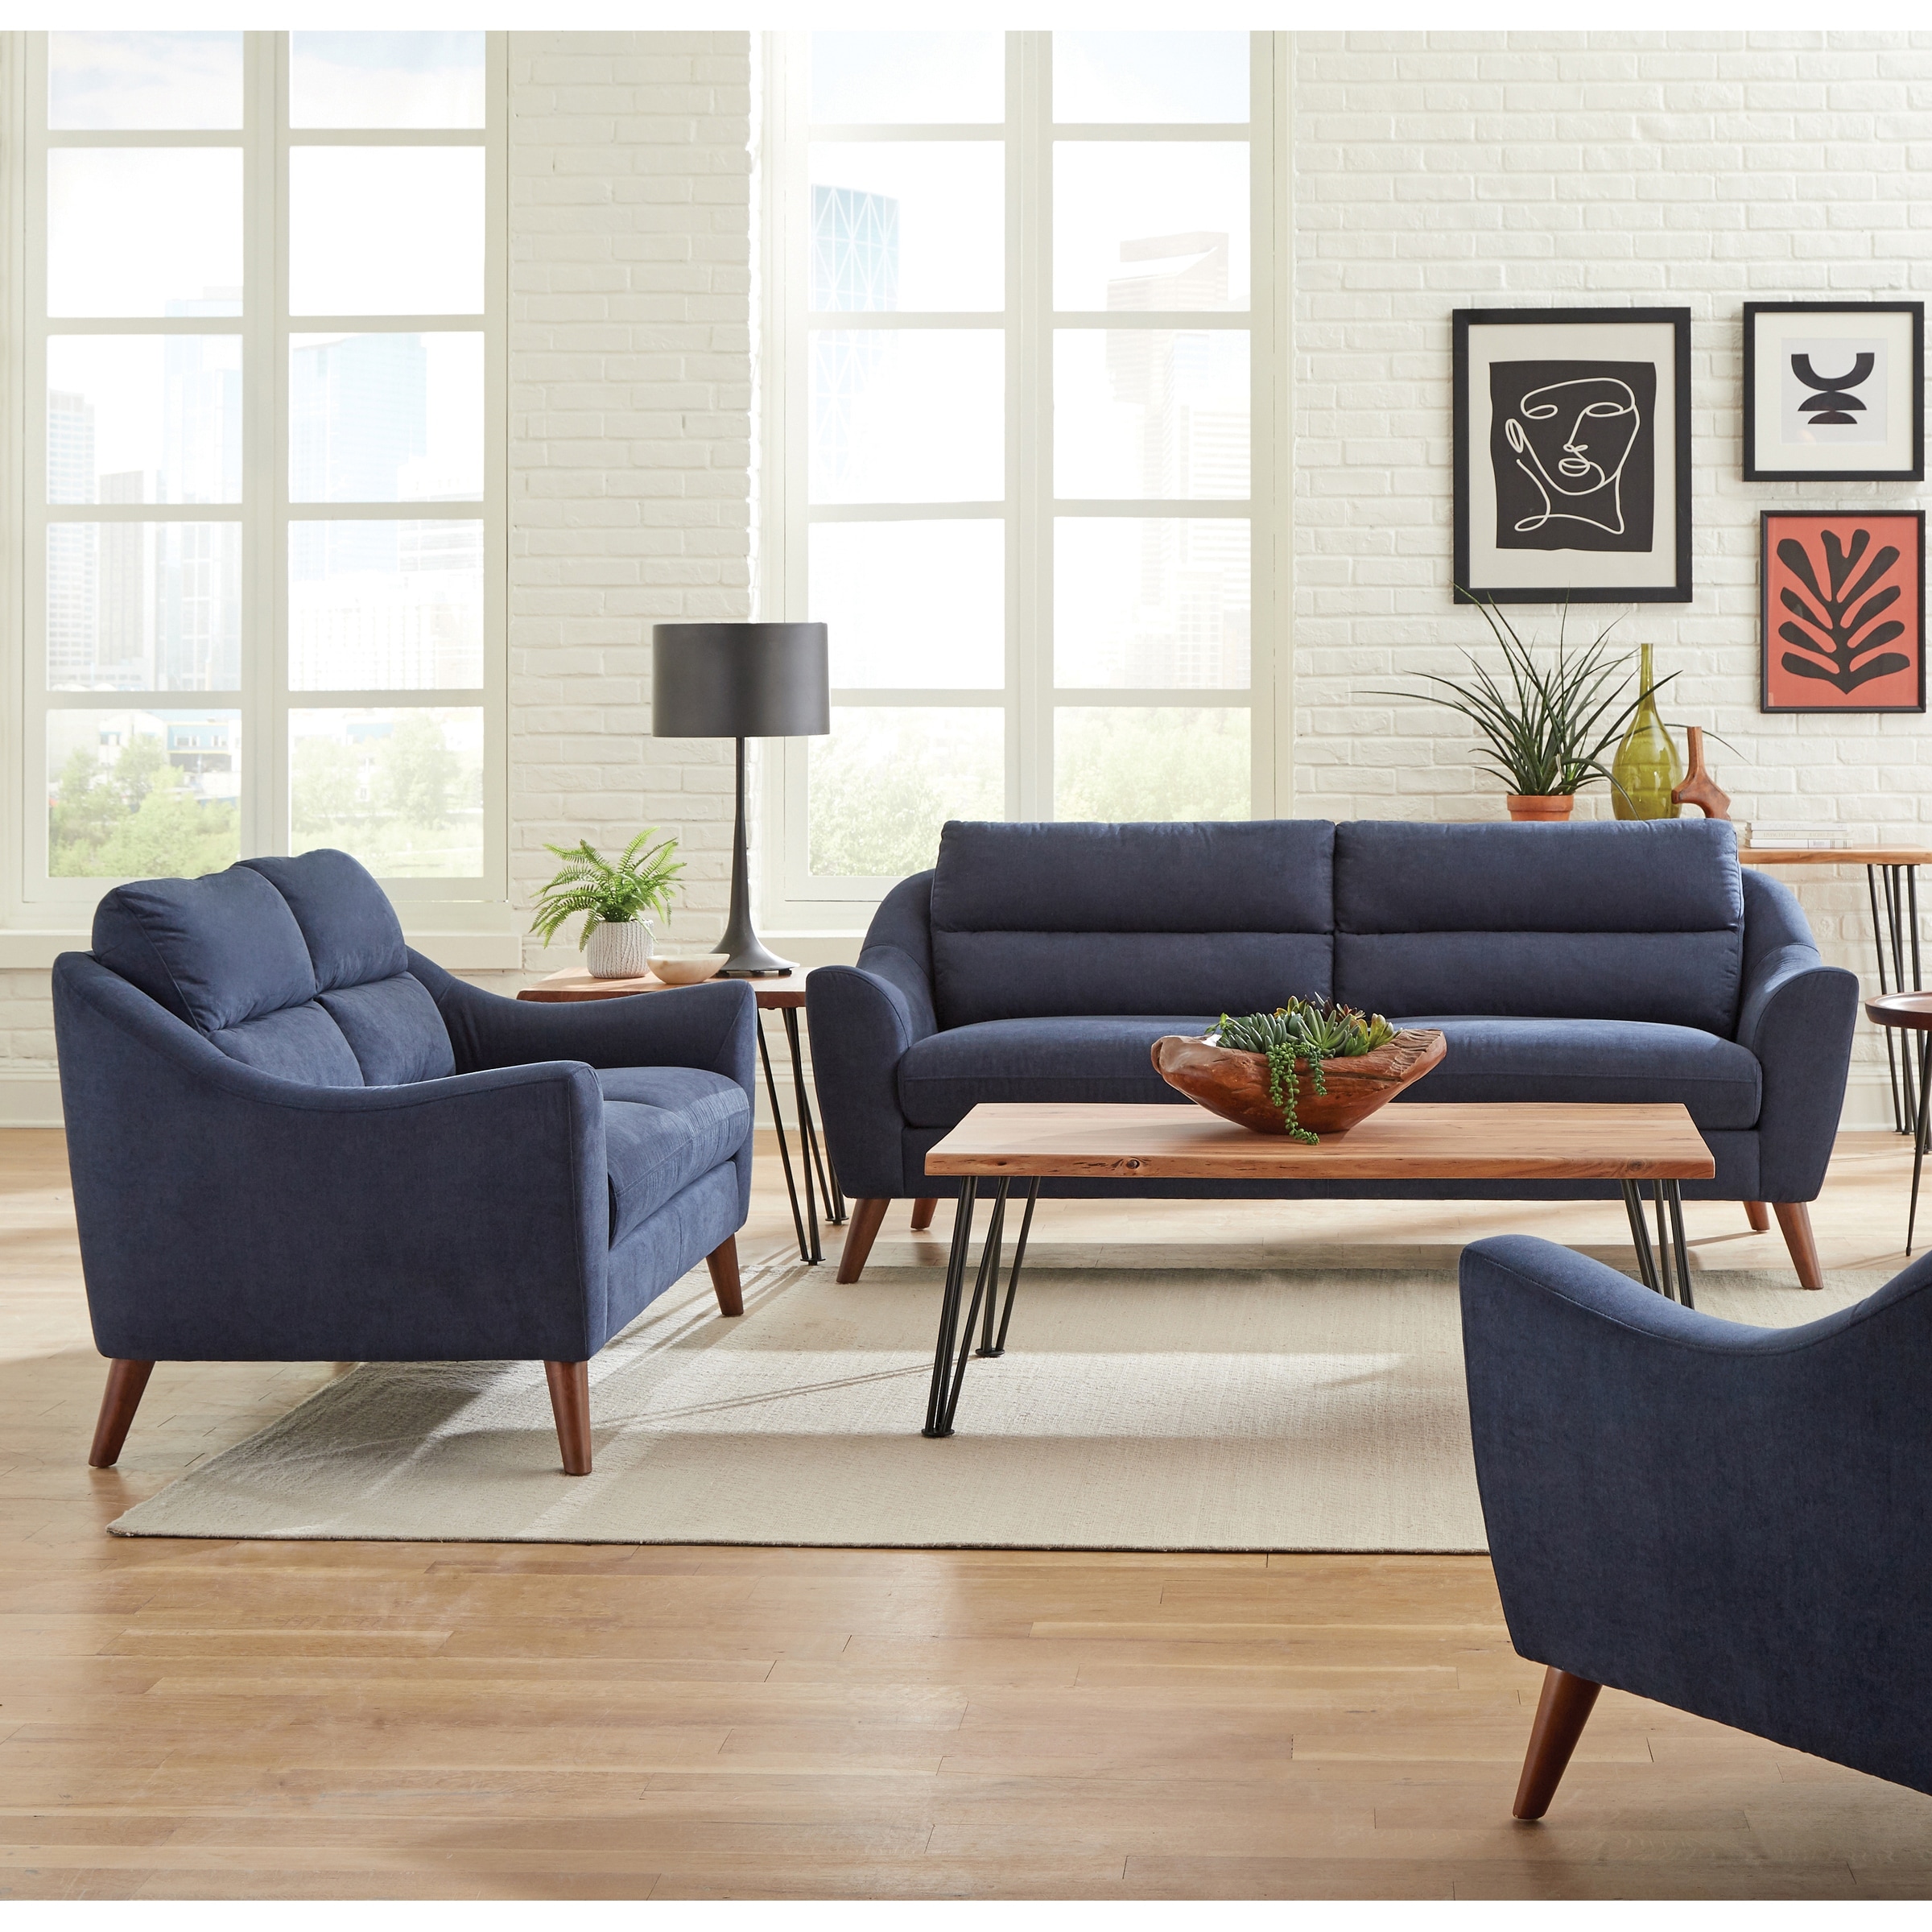 Awe-inspiring Ideas Of Navy Blue Living Room Set Concept | Kitchen Cool